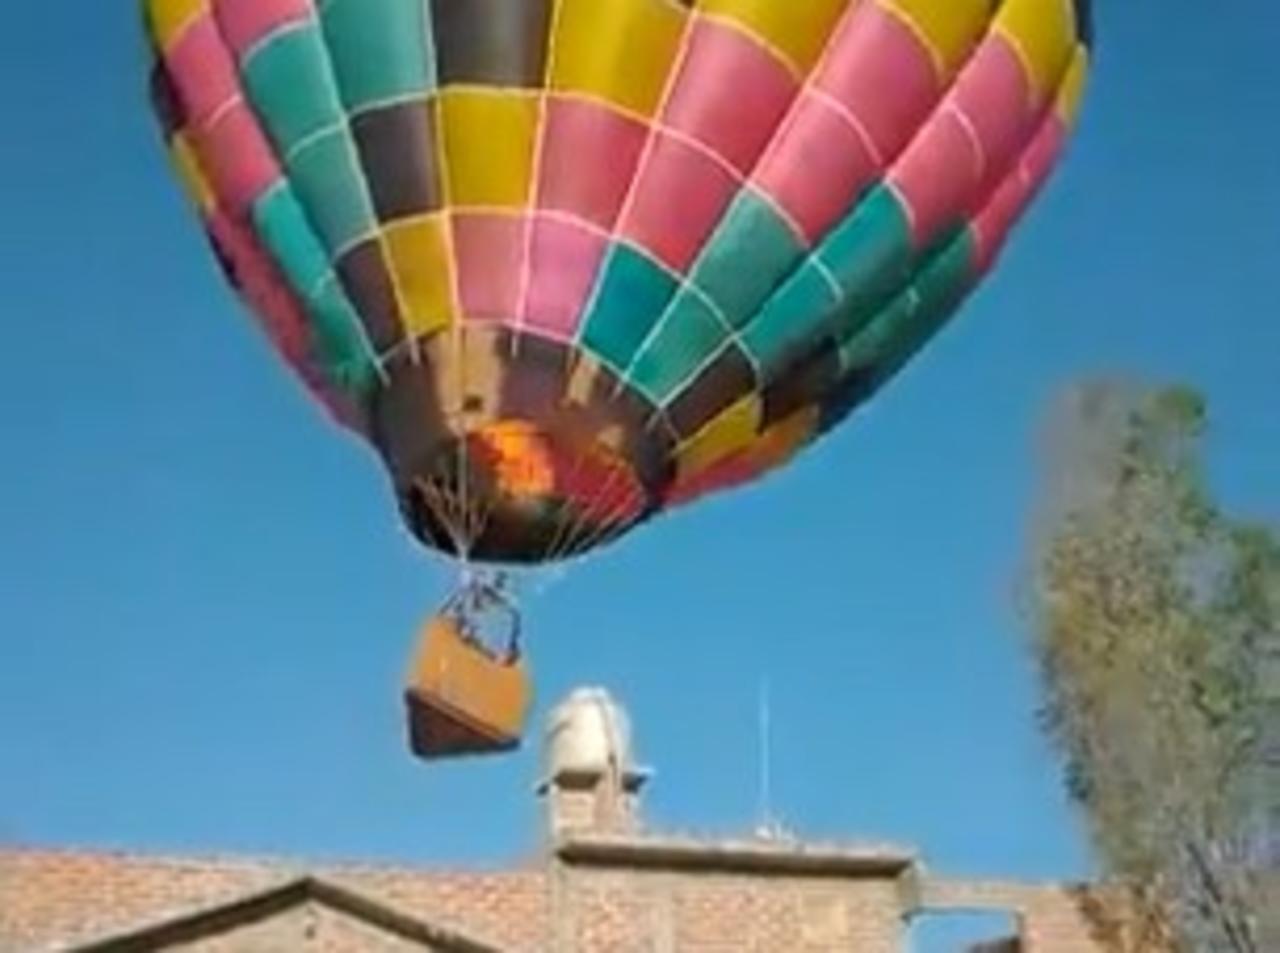 Globo aerostático en Guanajuato 'tumba' tinaco de casa al salir de ruta